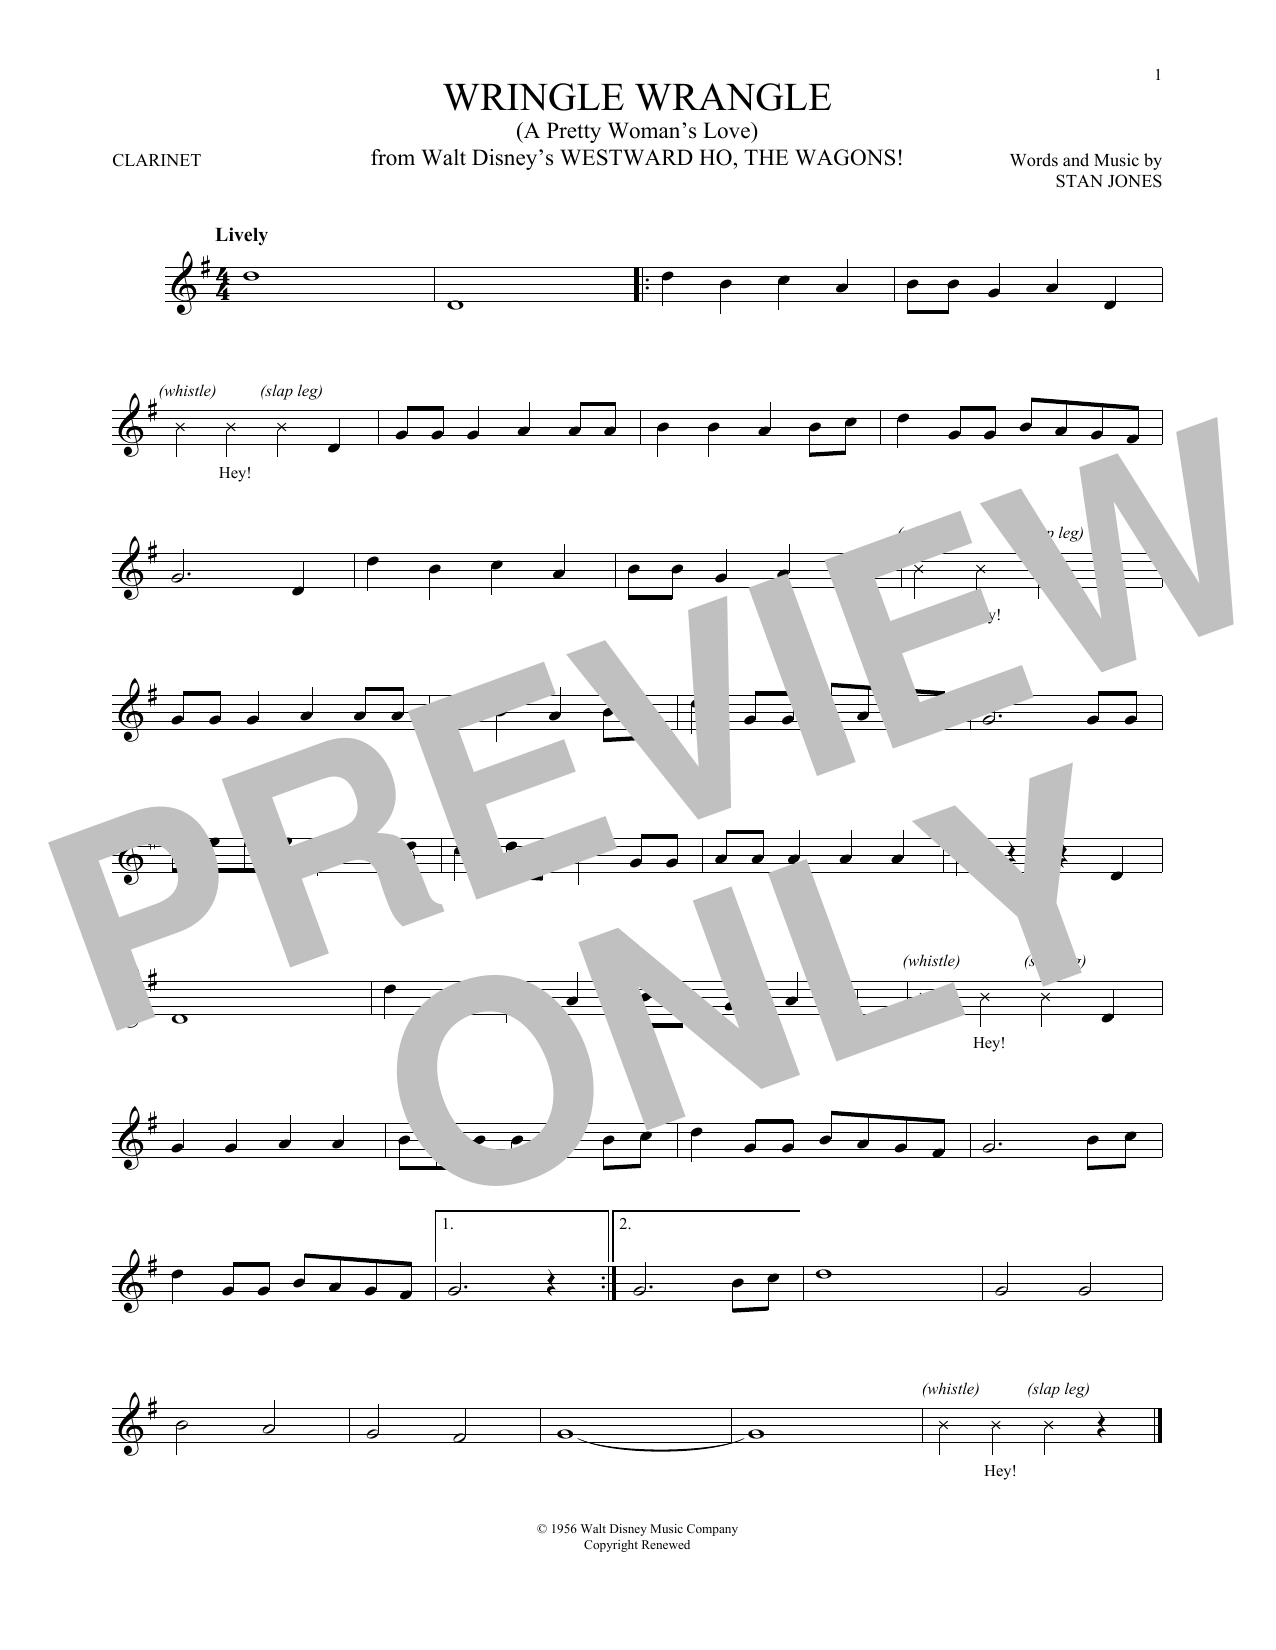 Stan Jones Wringle Wrangle (A Pretty Woman's Love) Sheet Music Notes & Chords for Viola - Download or Print PDF